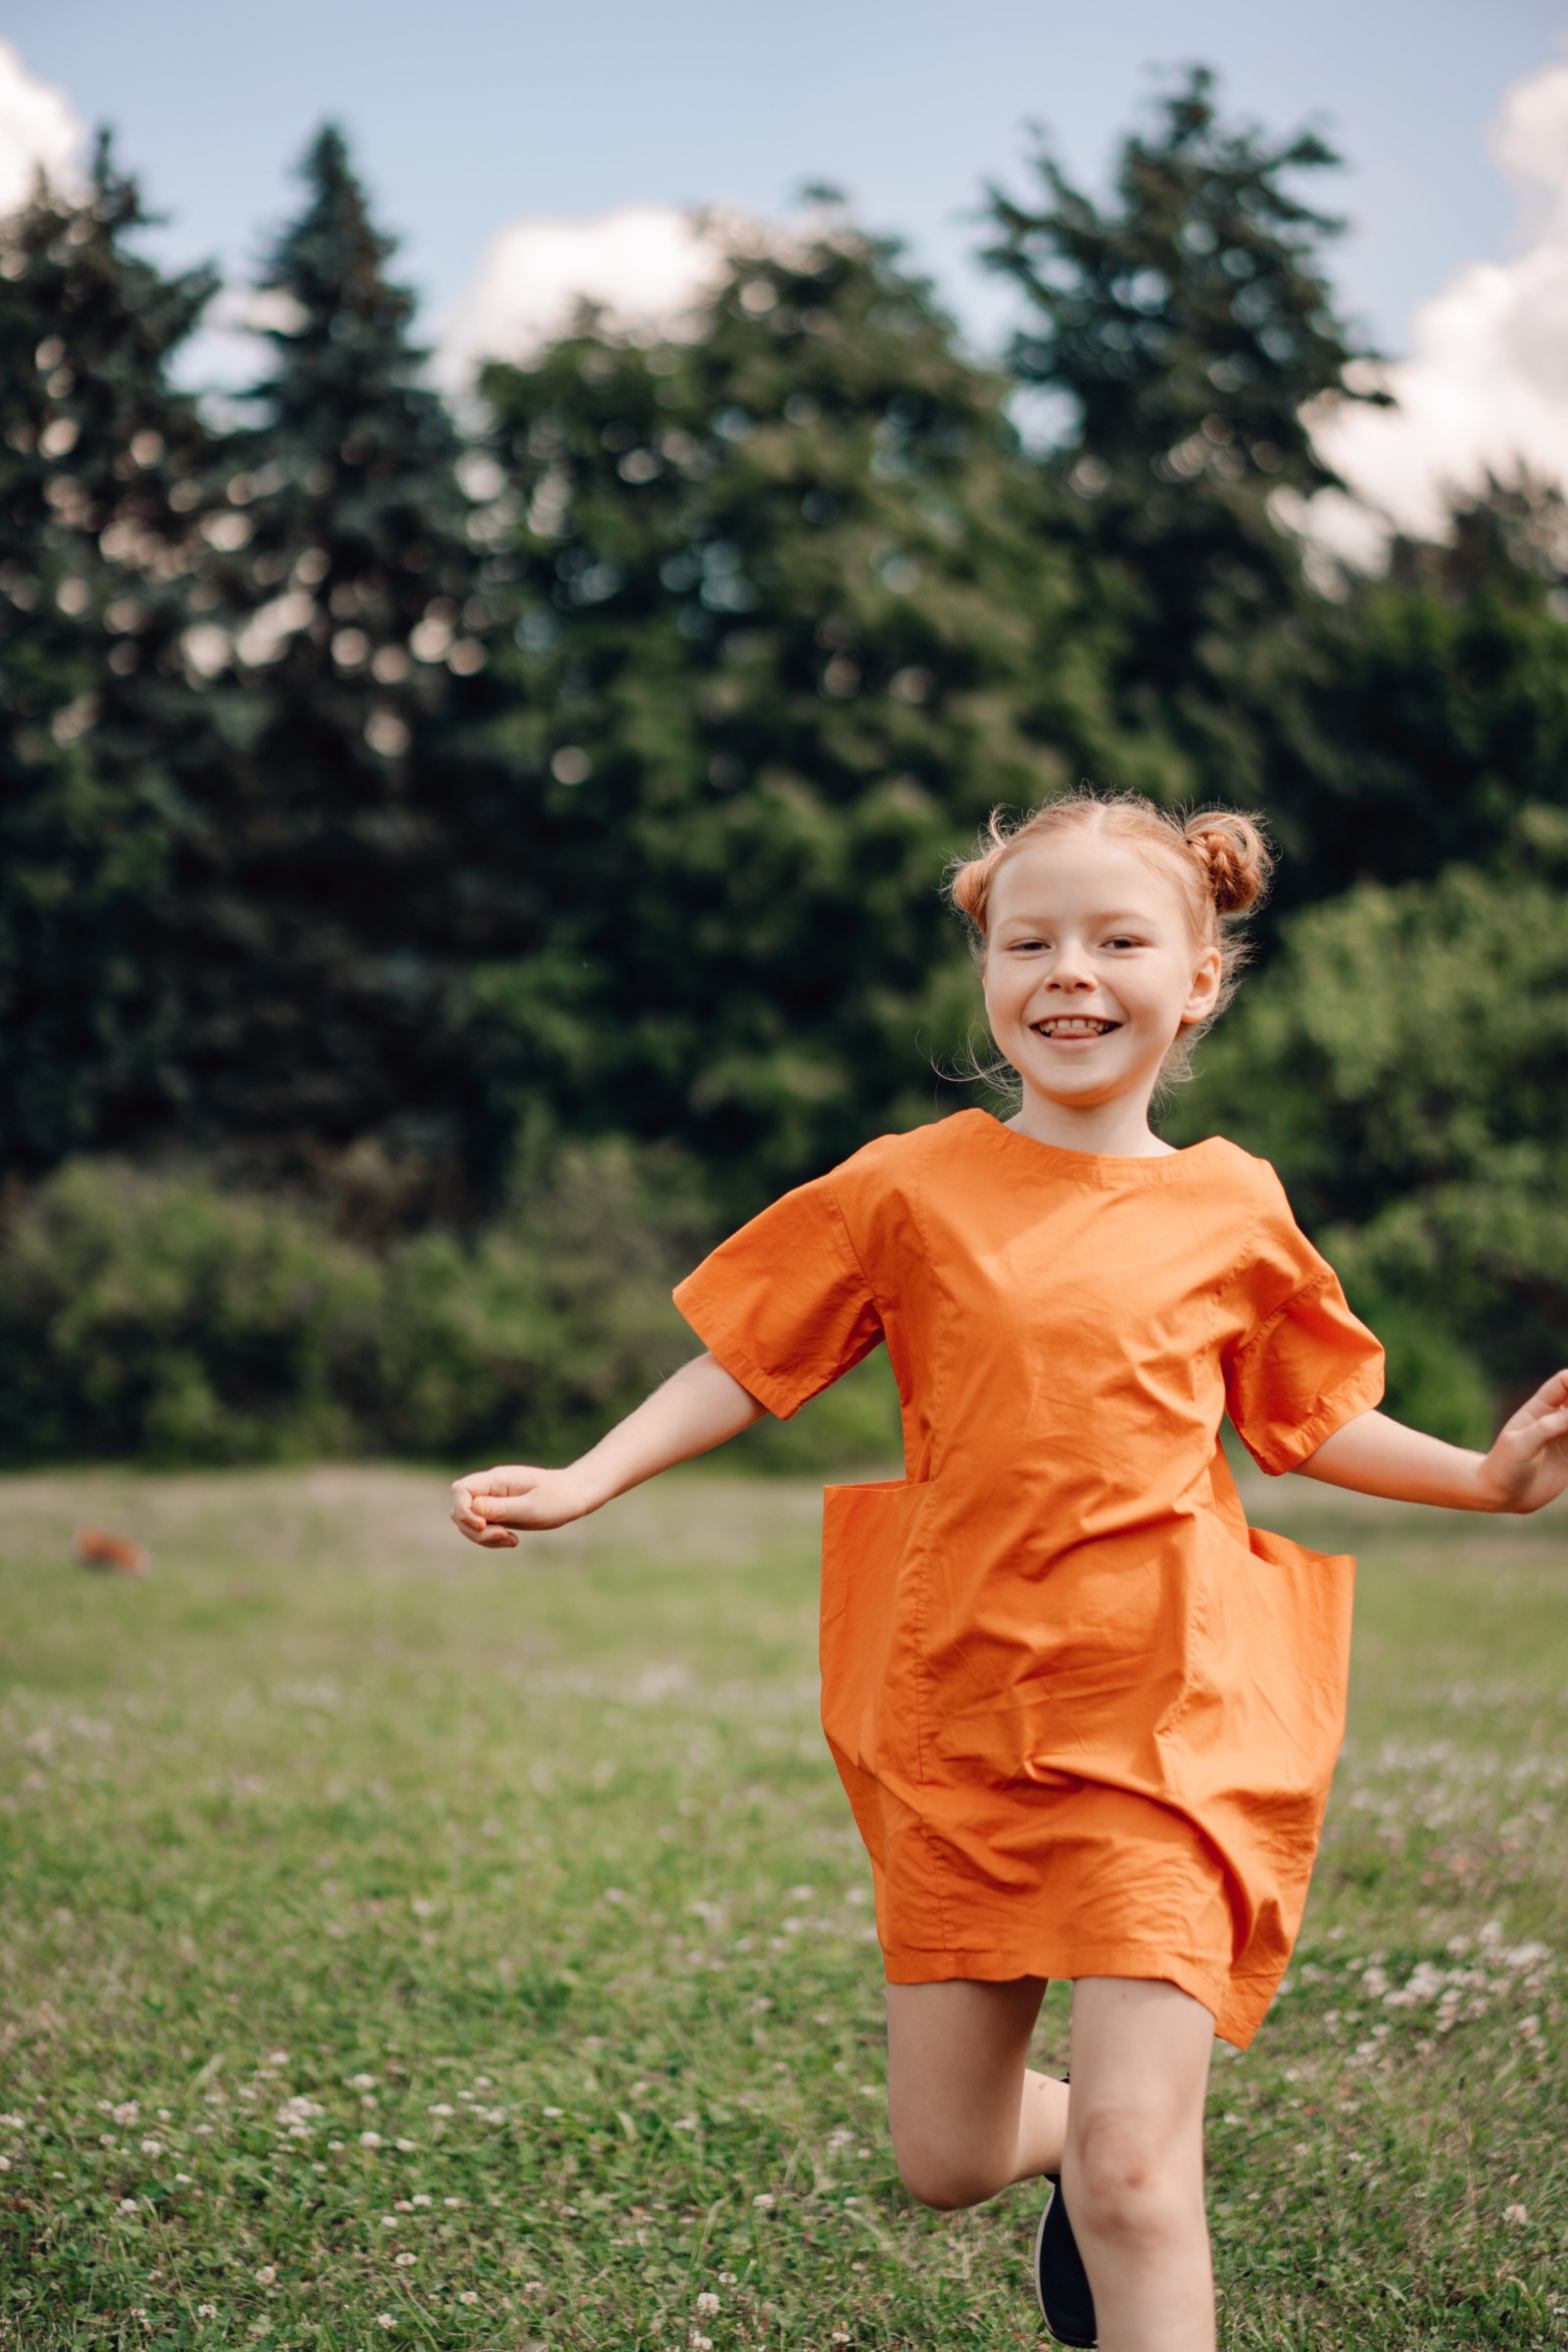 a smiling girl running through a field in an orange dress